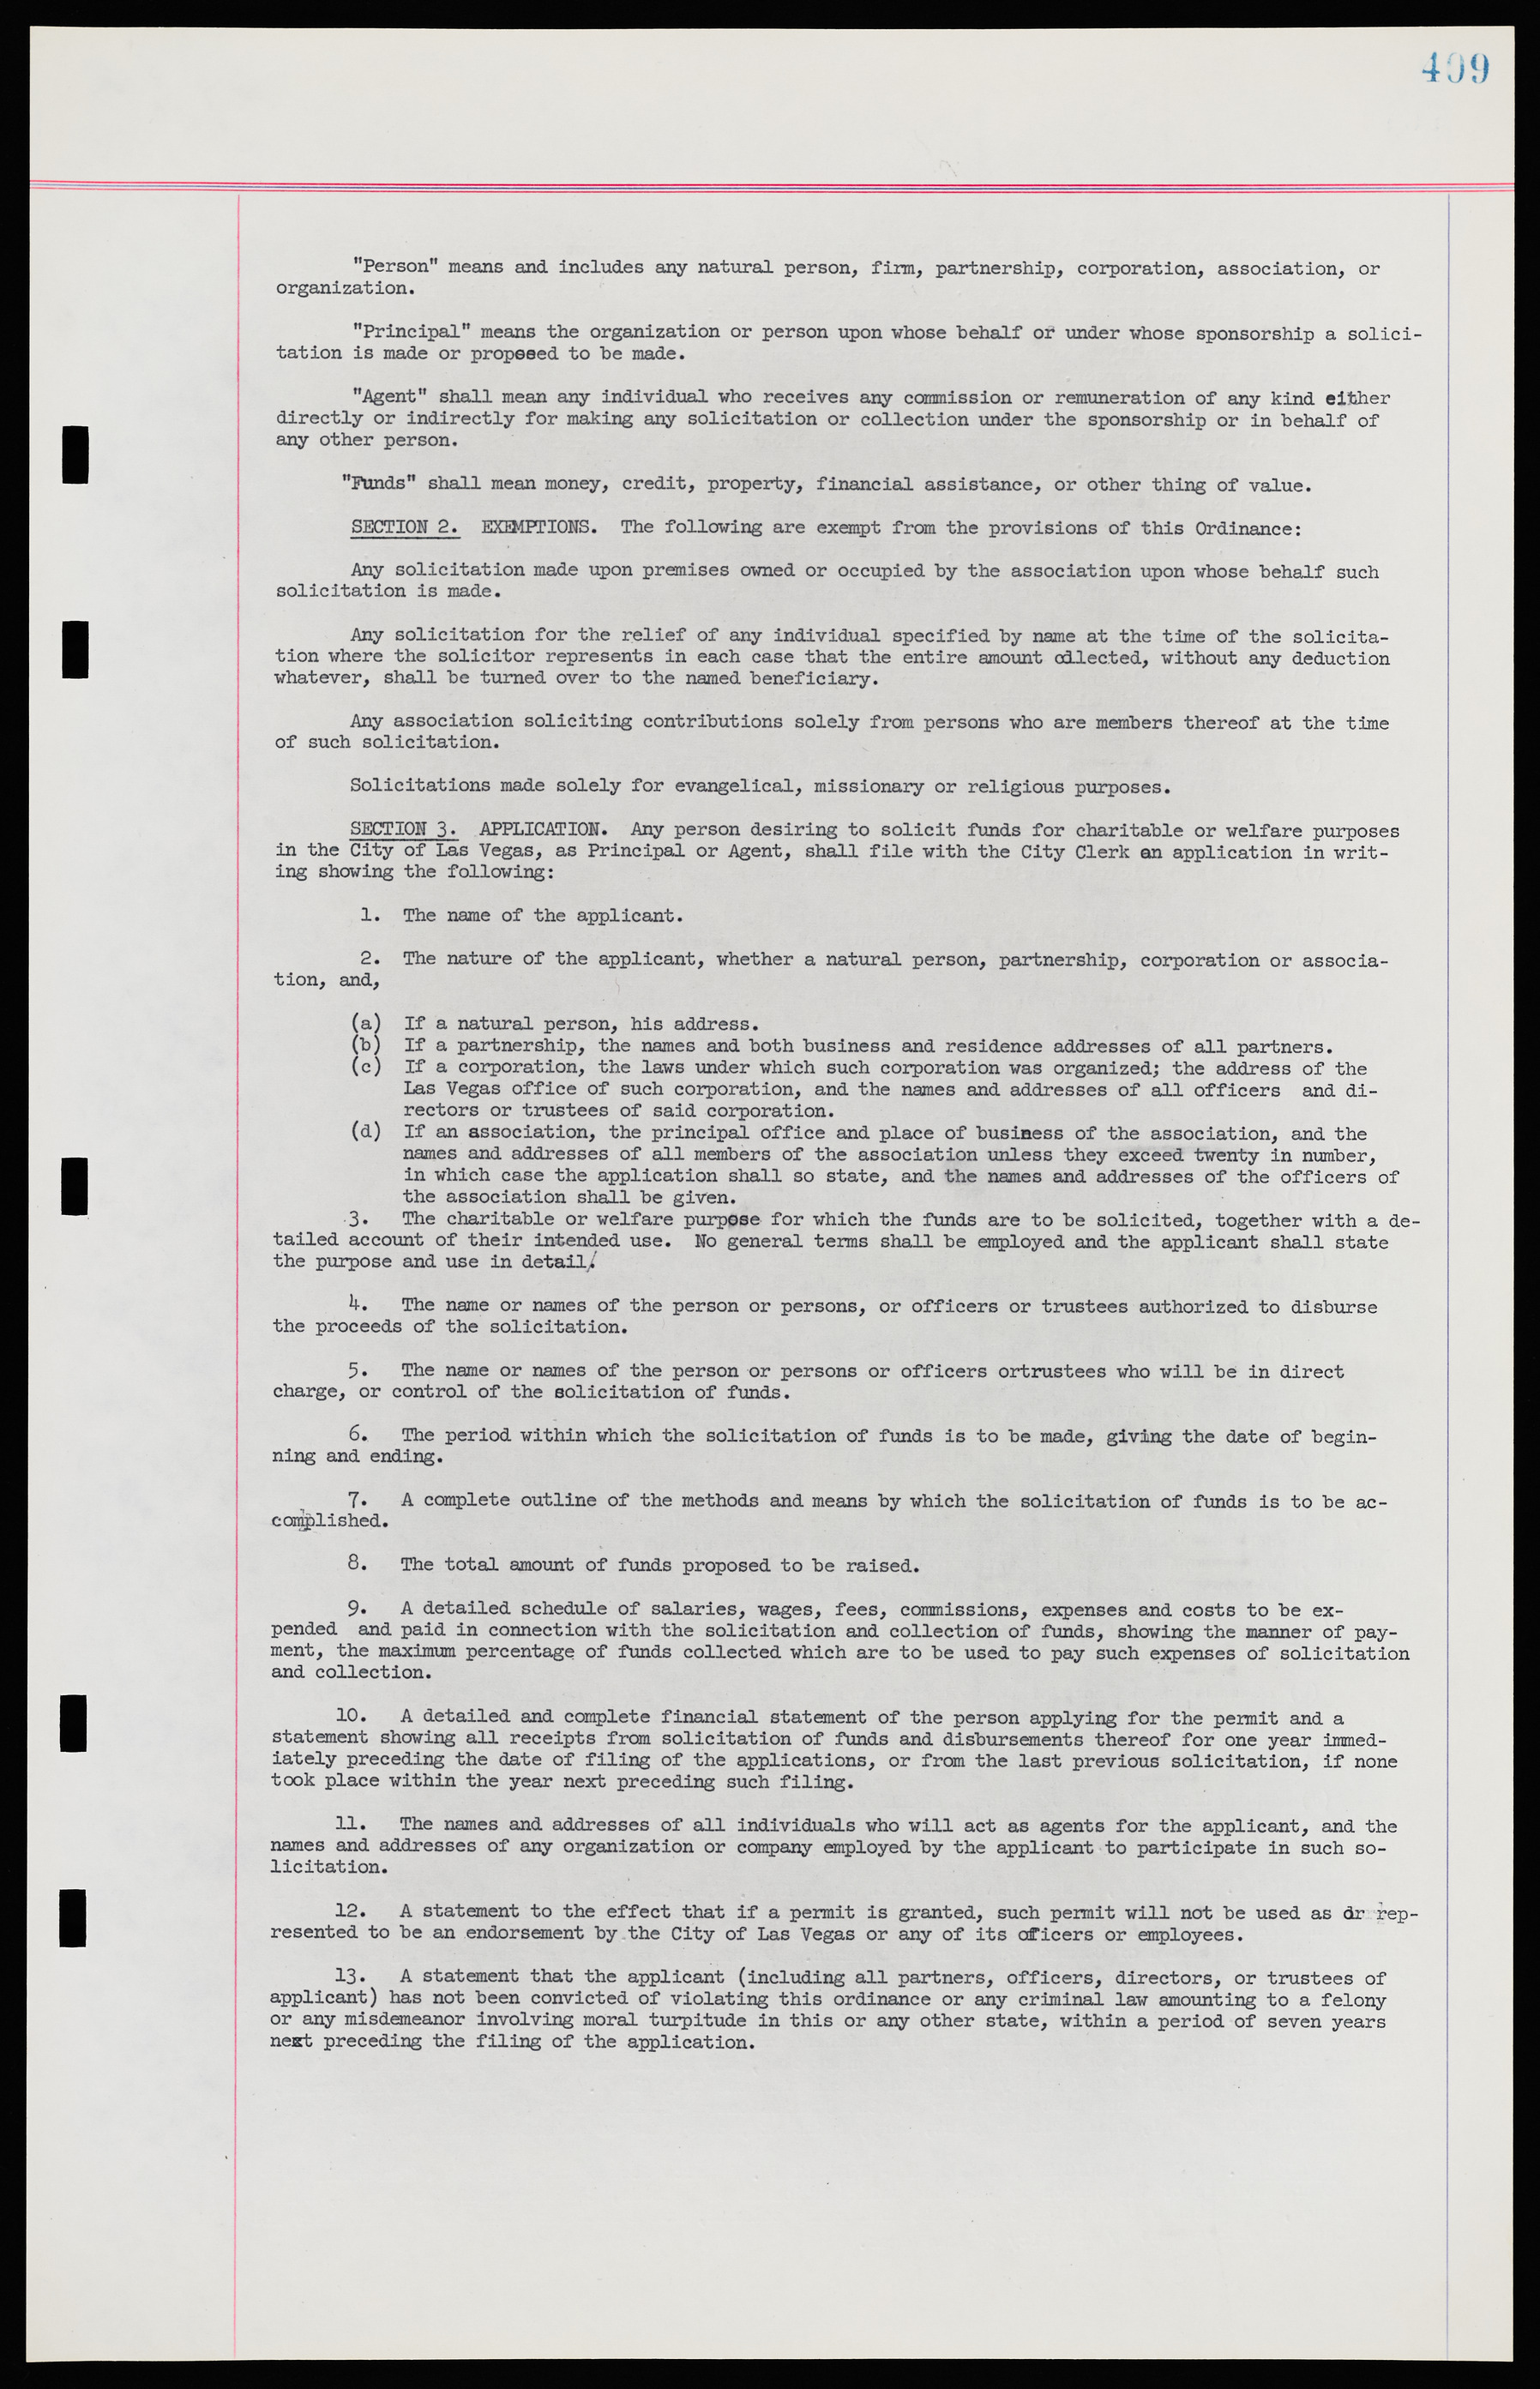 Las Vegas City Ordinances, November 13, 1950 to August 6, 1958, lvc000015-417